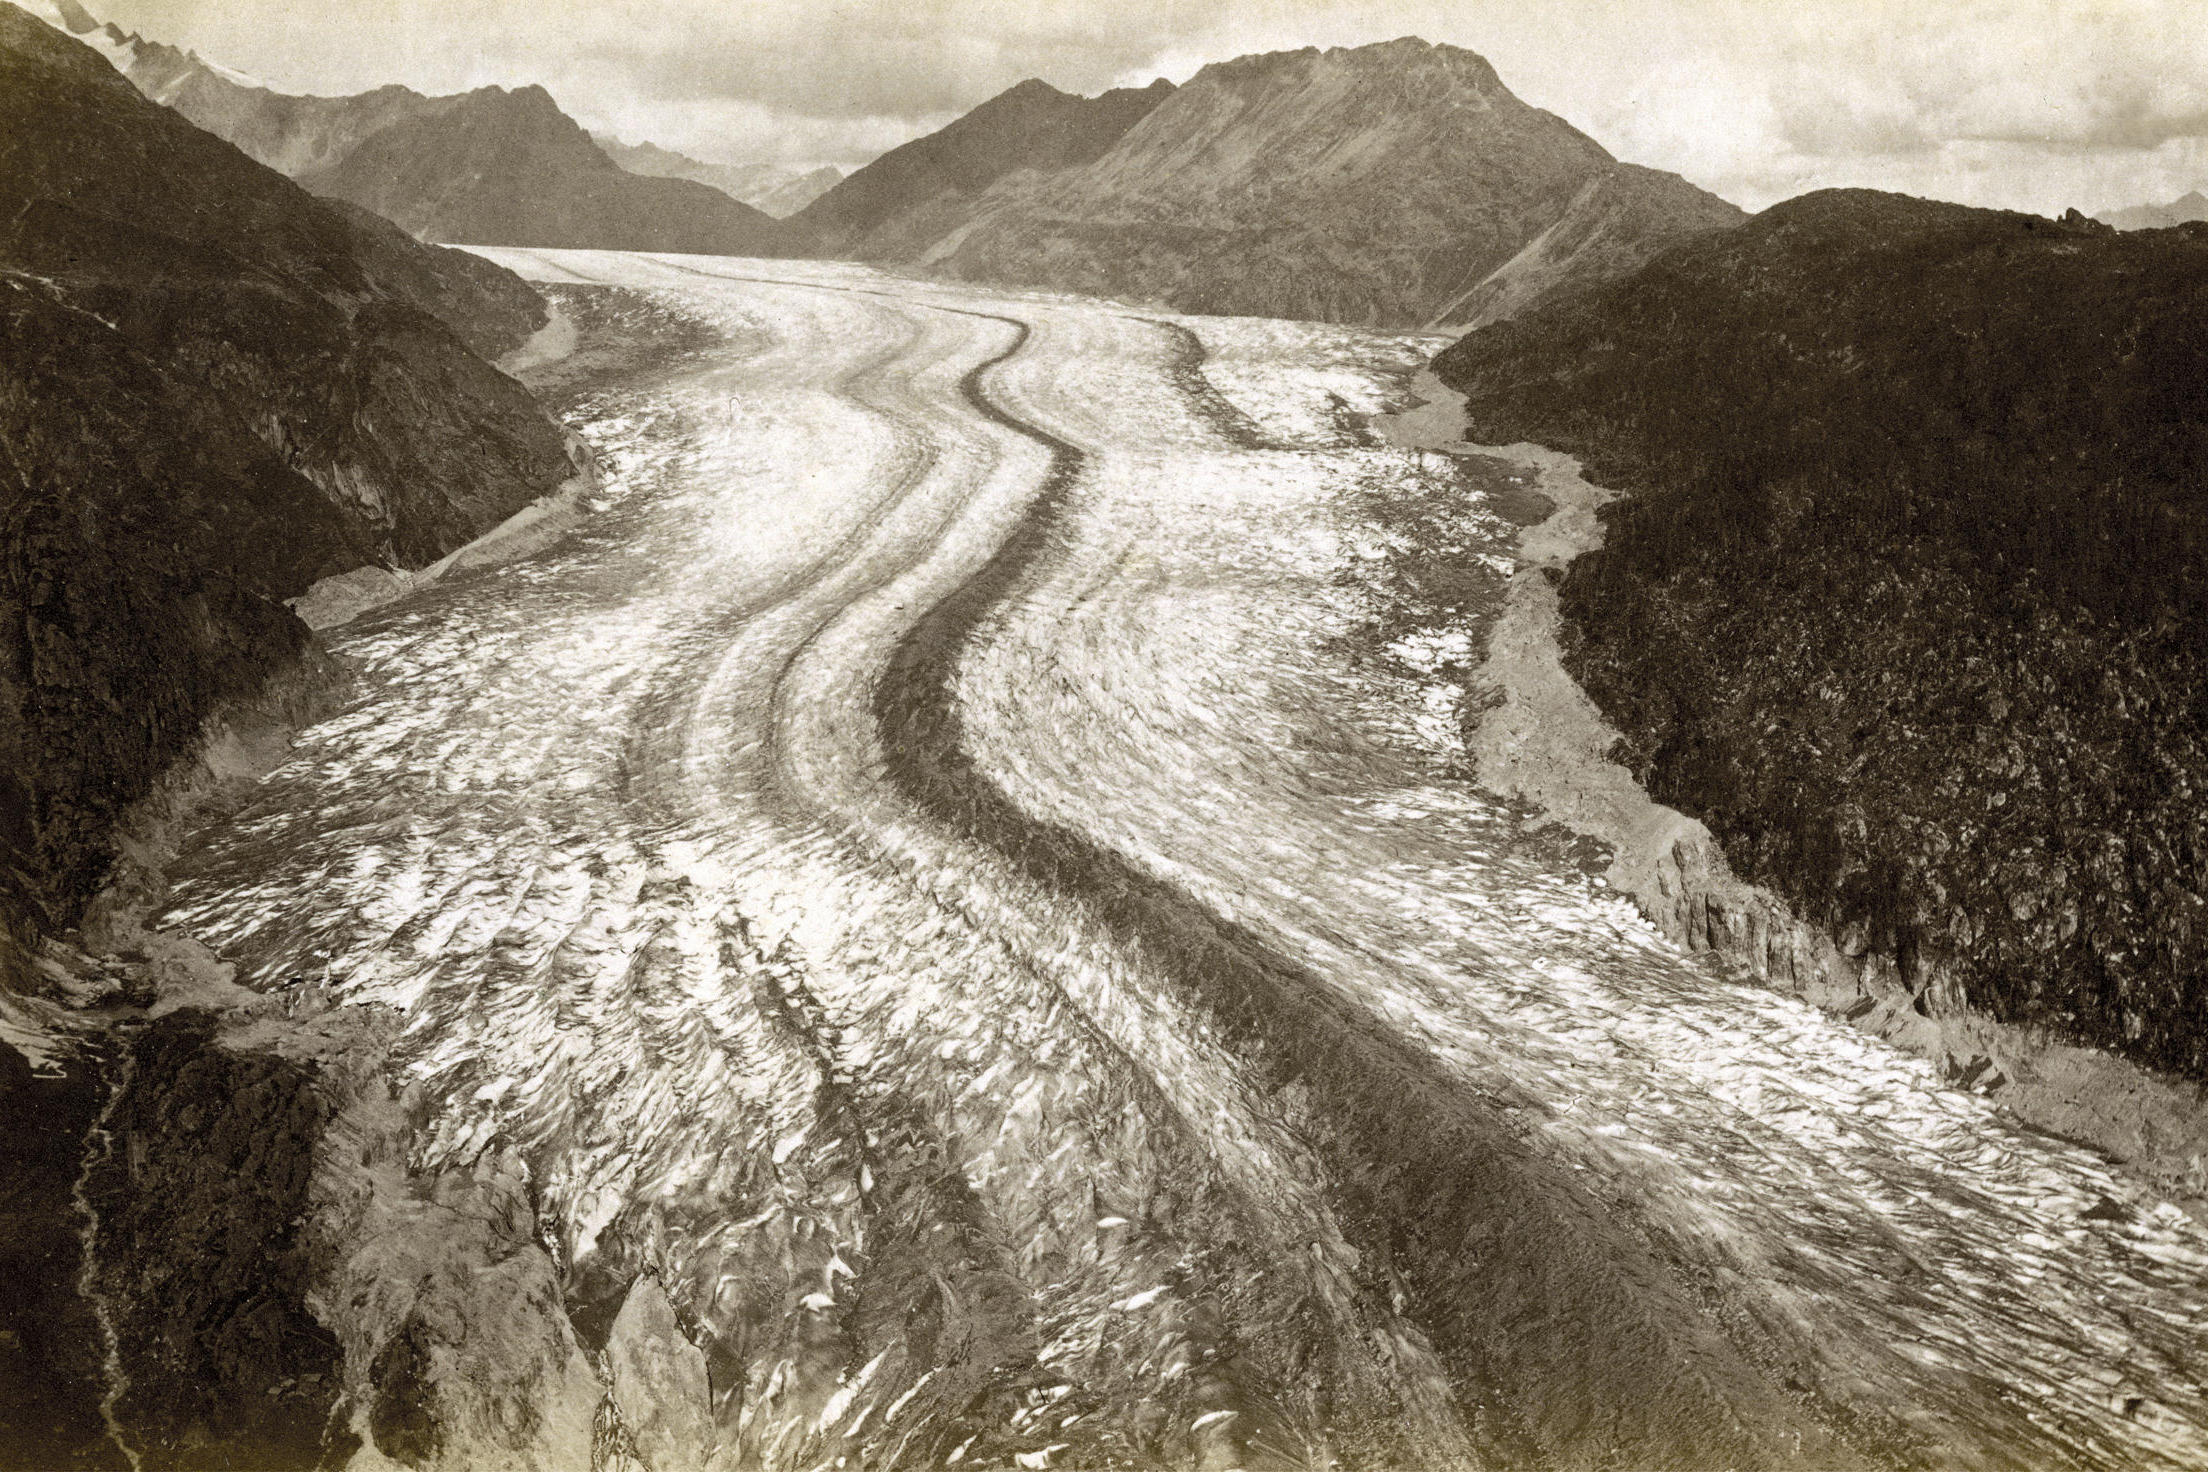 Archive image of glacier